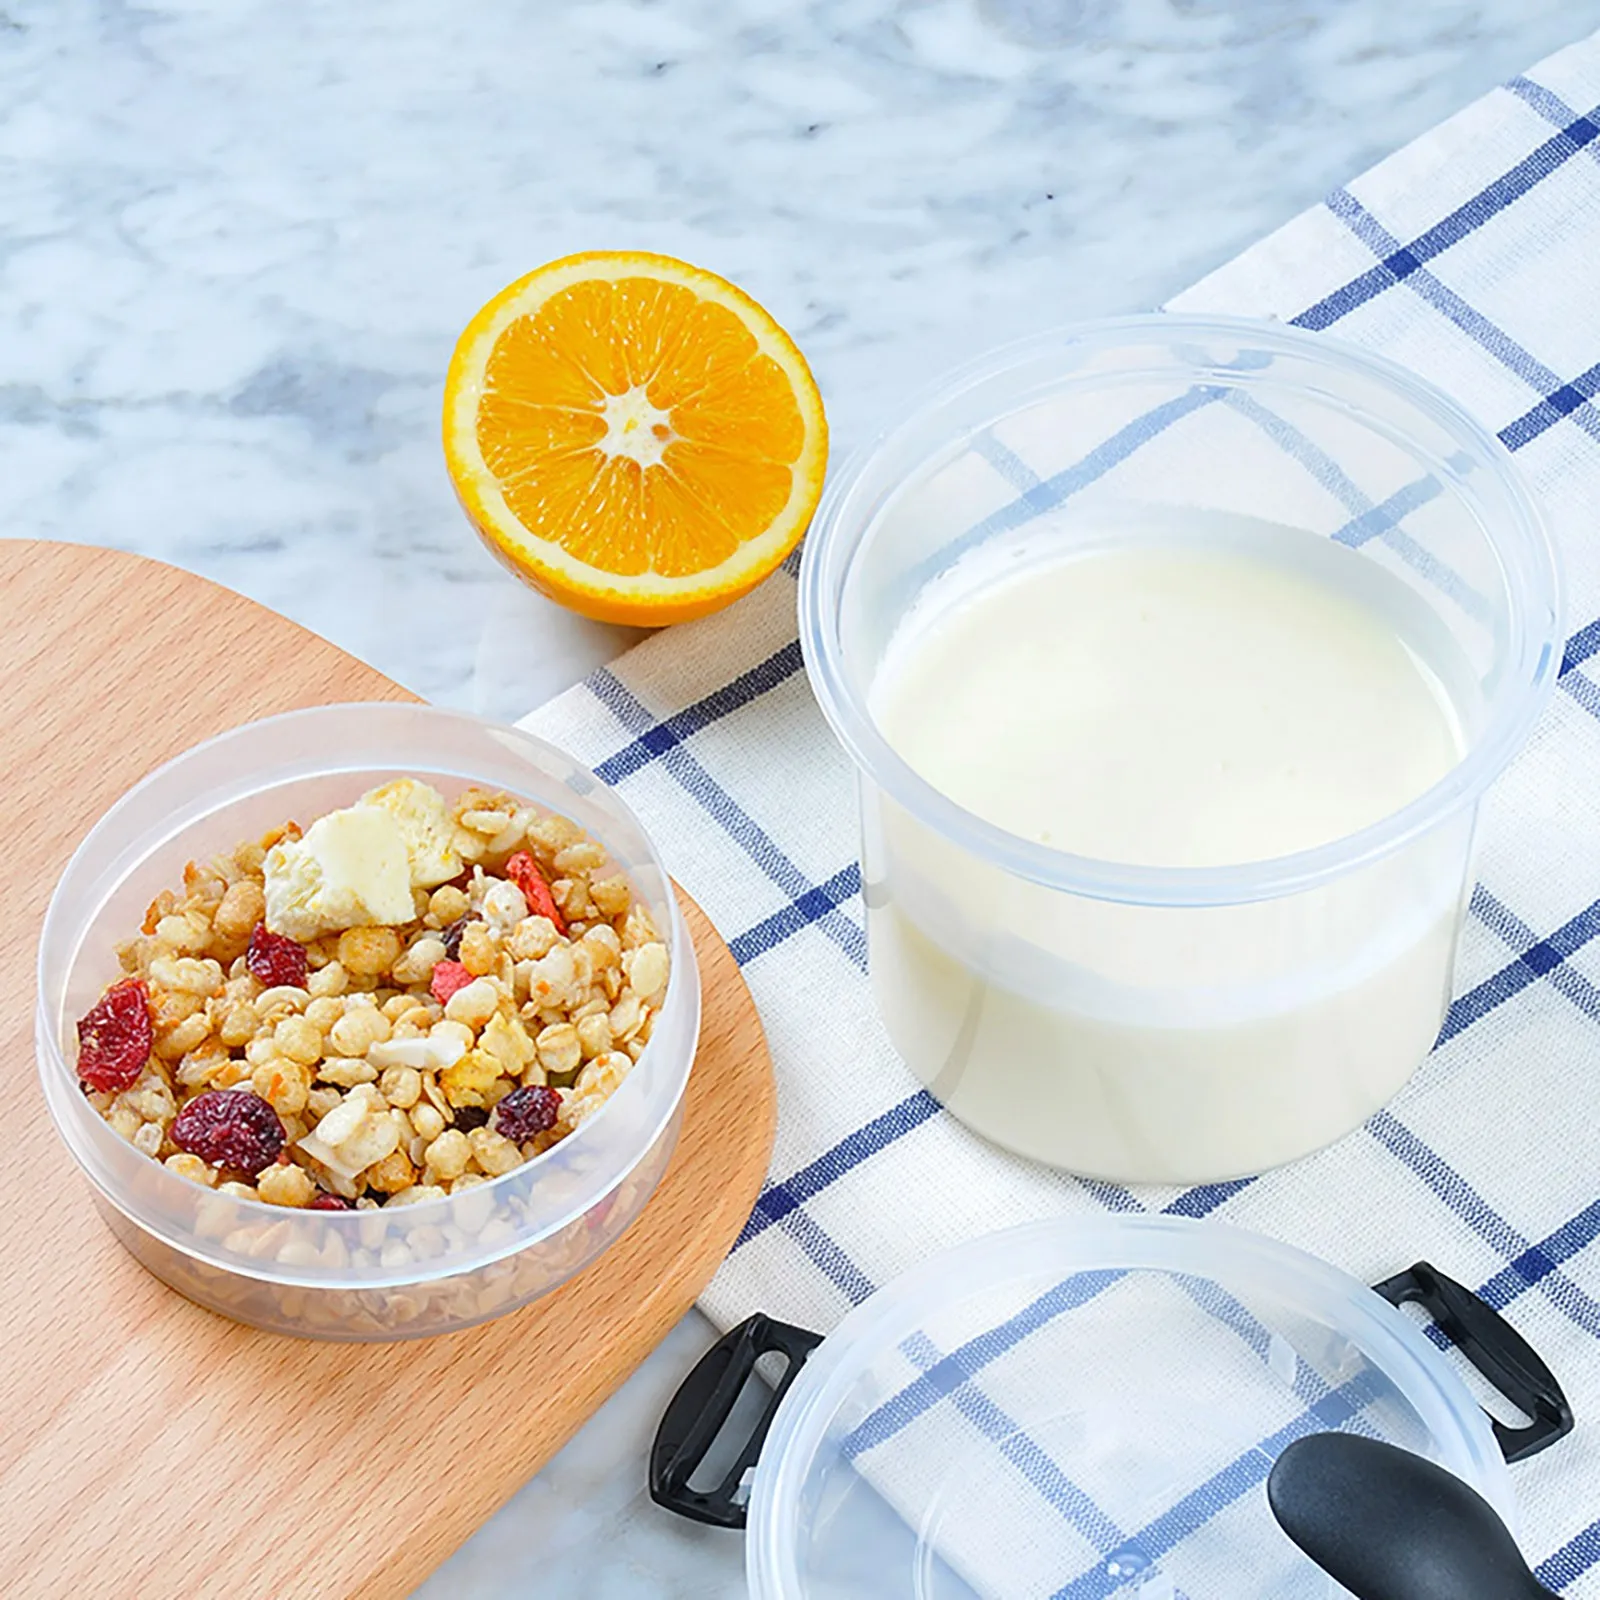 https://ae01.alicdn.com/kf/Sd98885dac70b4bd7bd0ae23f3465ecc6L/Portable-Reusable-Parfait-Cups-With-Lids-Yogurt-Cereal-Oatmeal-Container-Leak-Proof-Breakfast-Food-Fruit-Storage.jpg